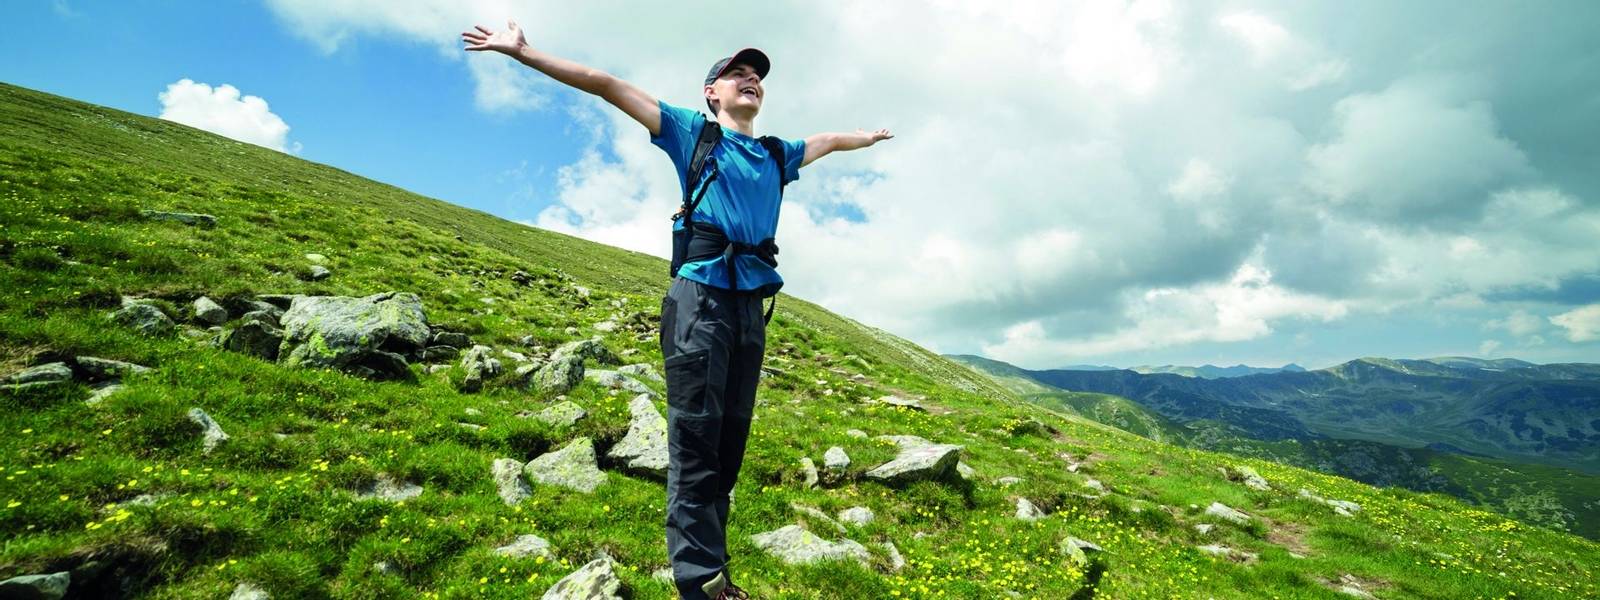 Teenage boy hiker on the mountains